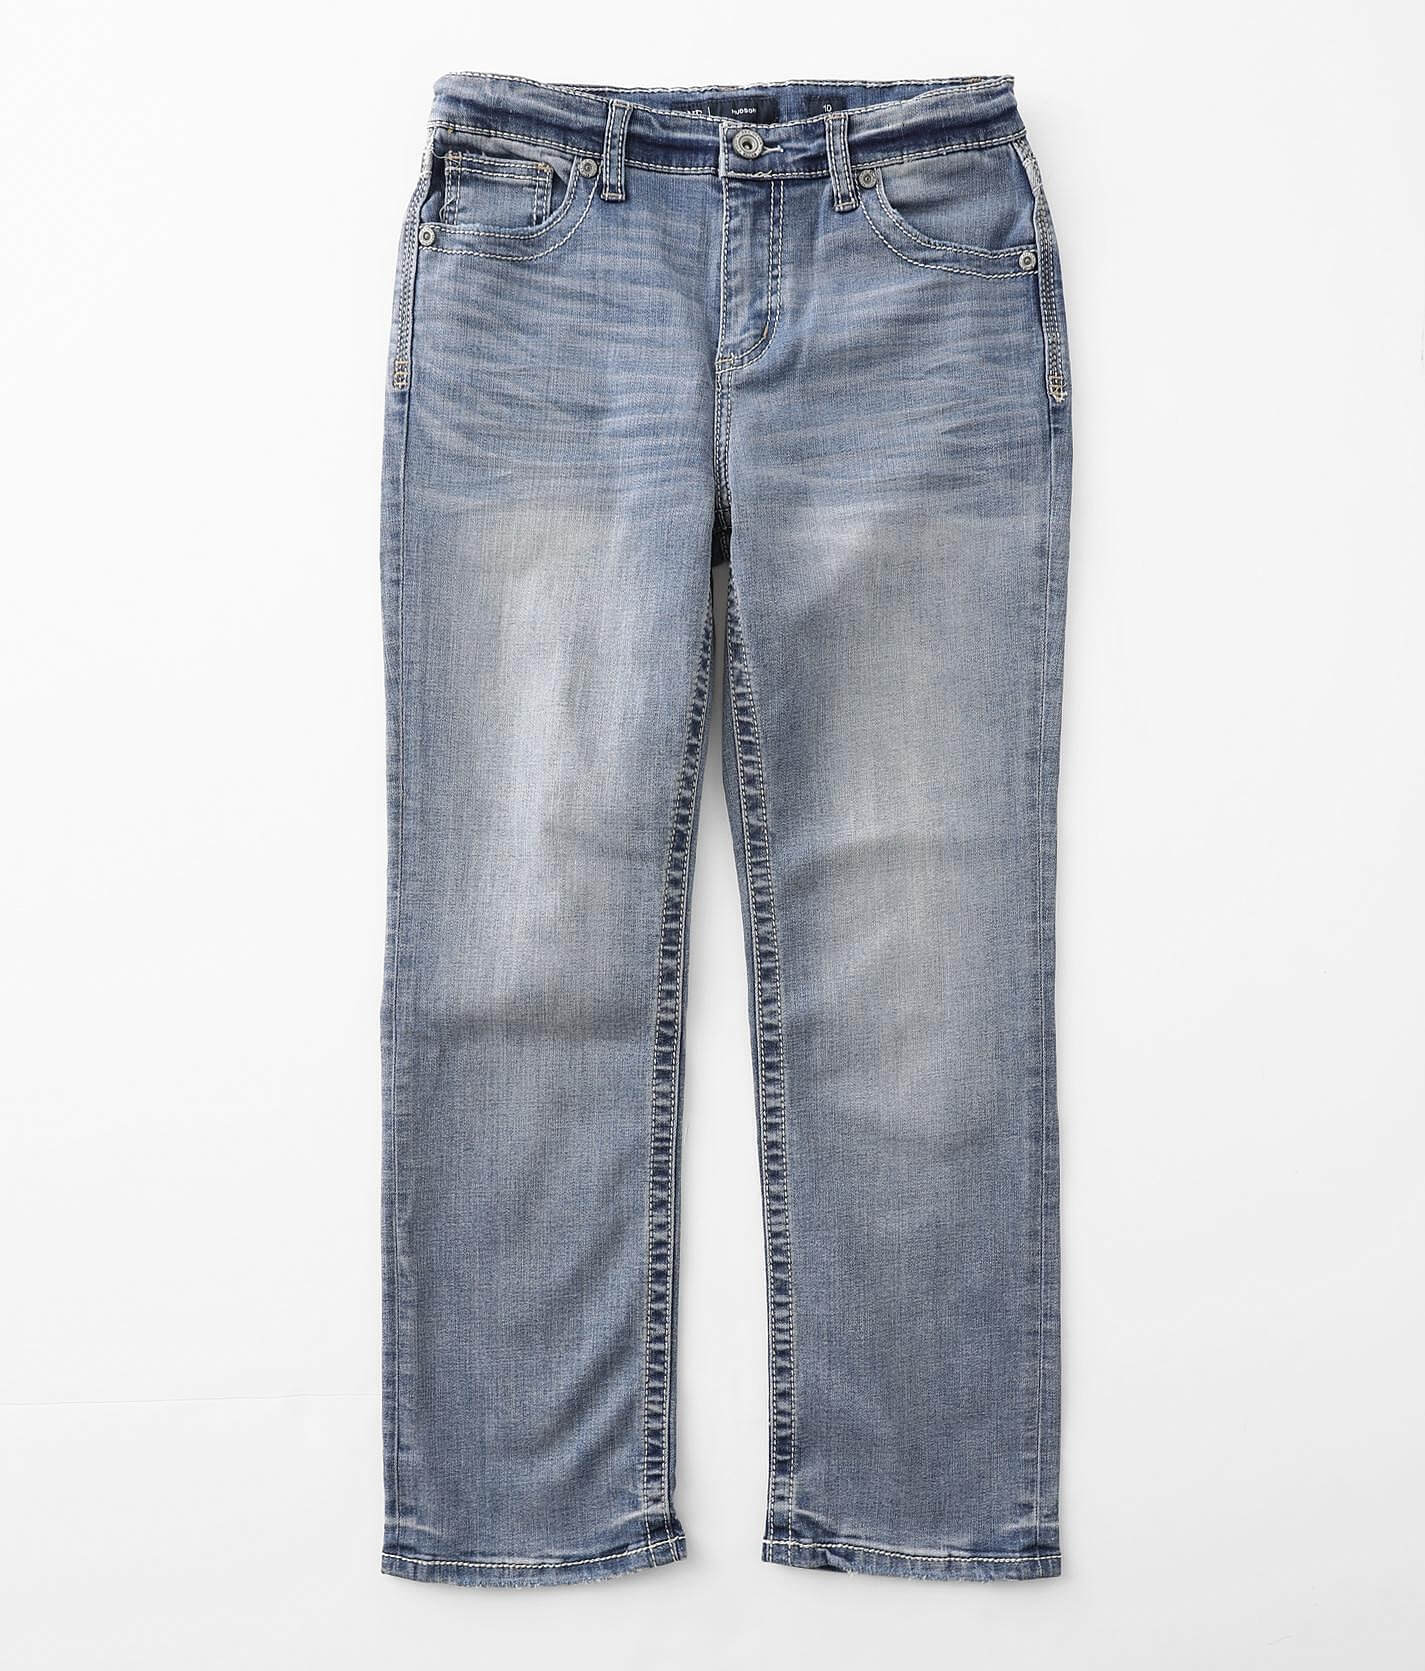 buckle jeans cheap